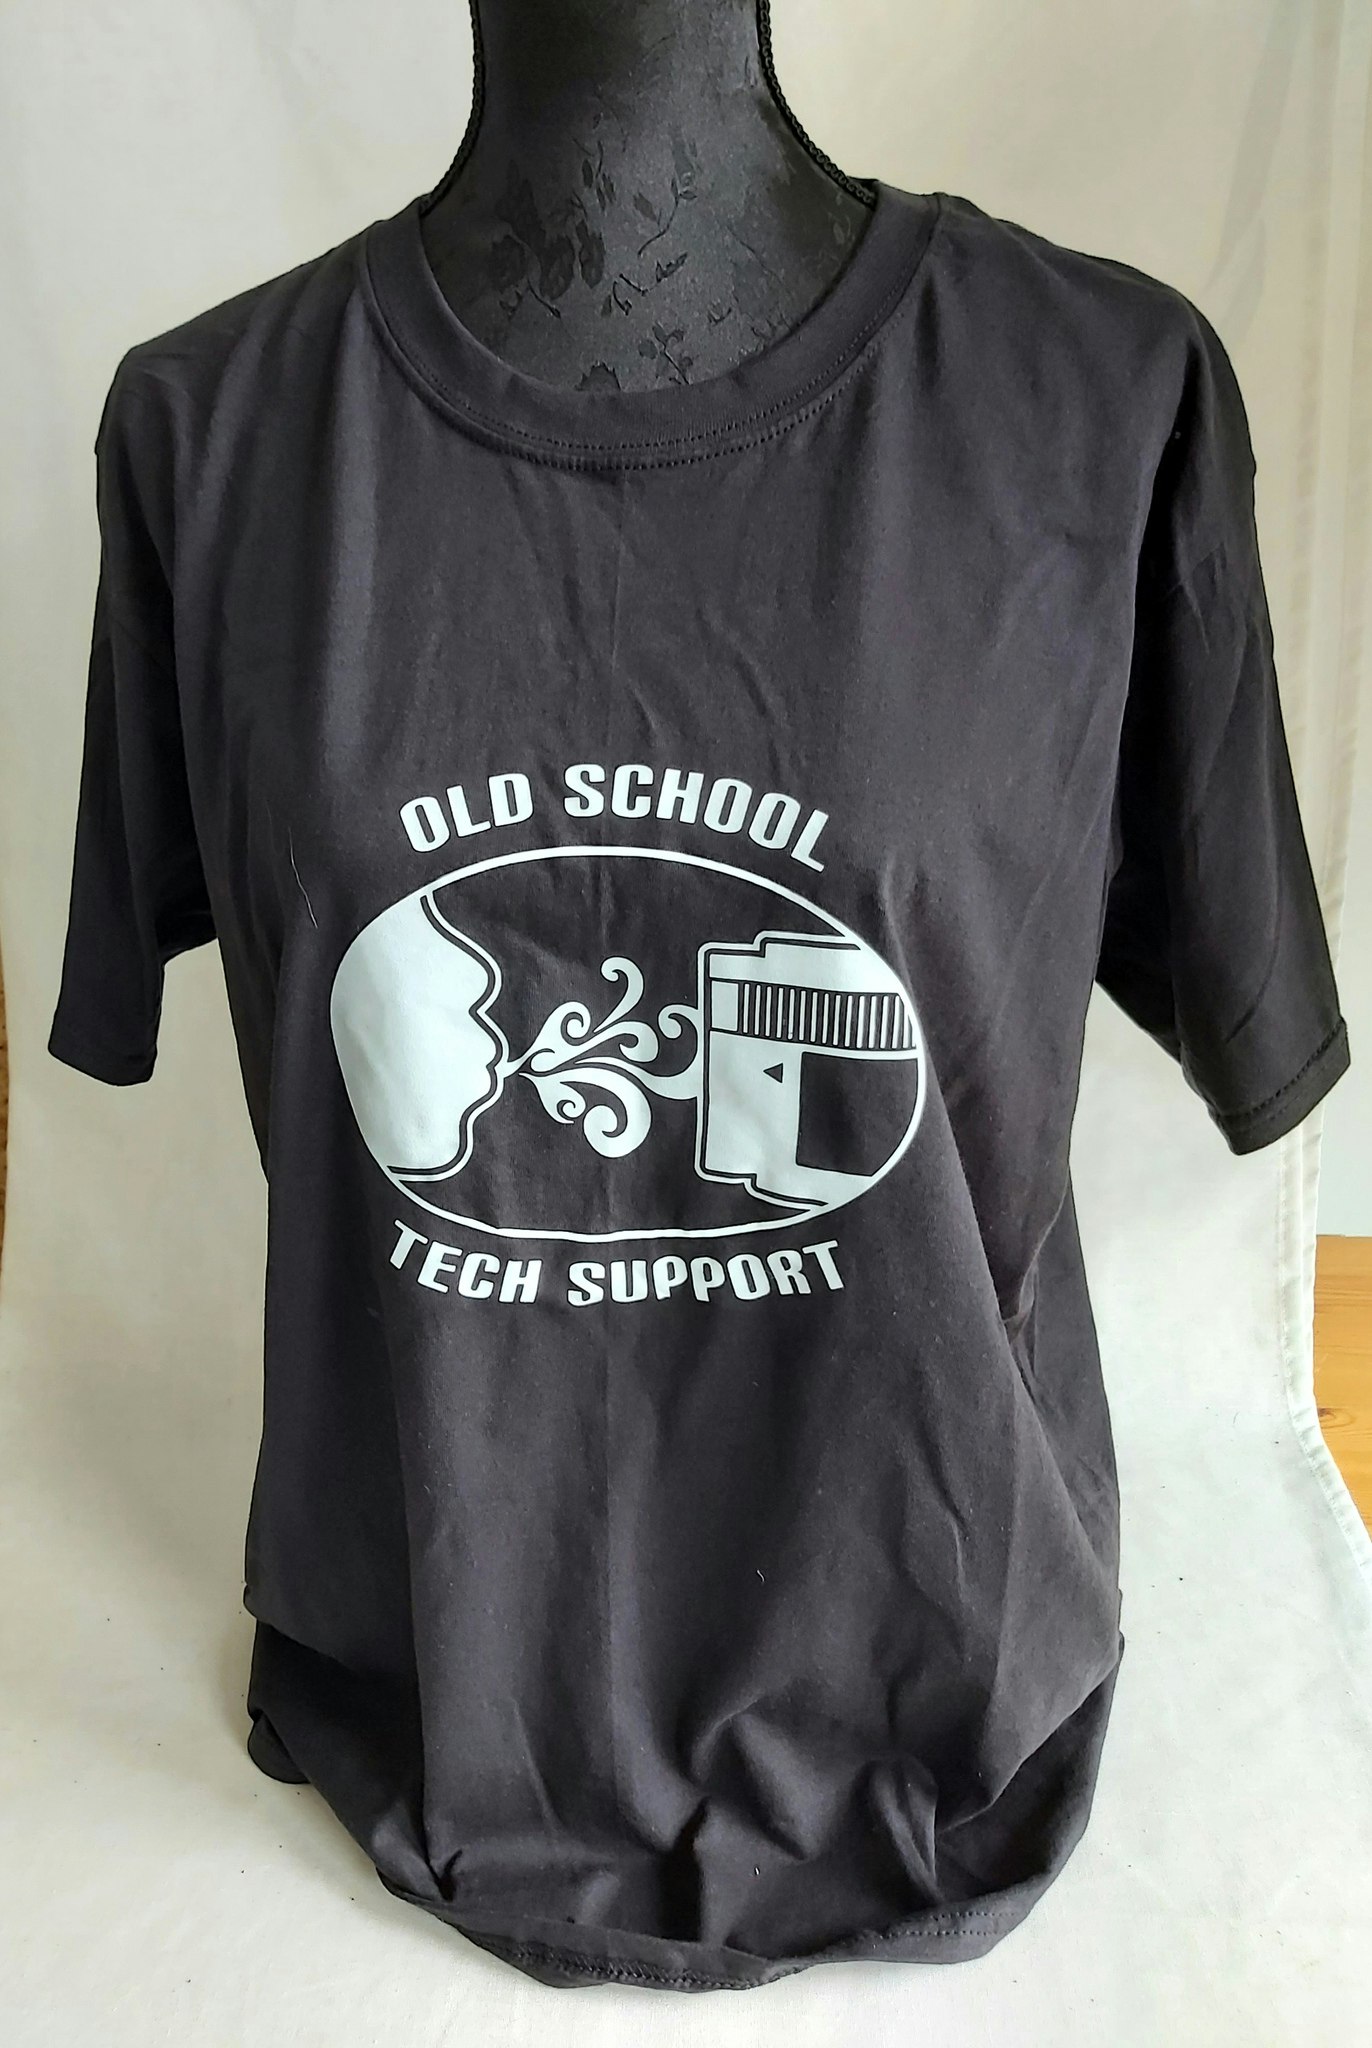 Old School Tech Support t-shirt